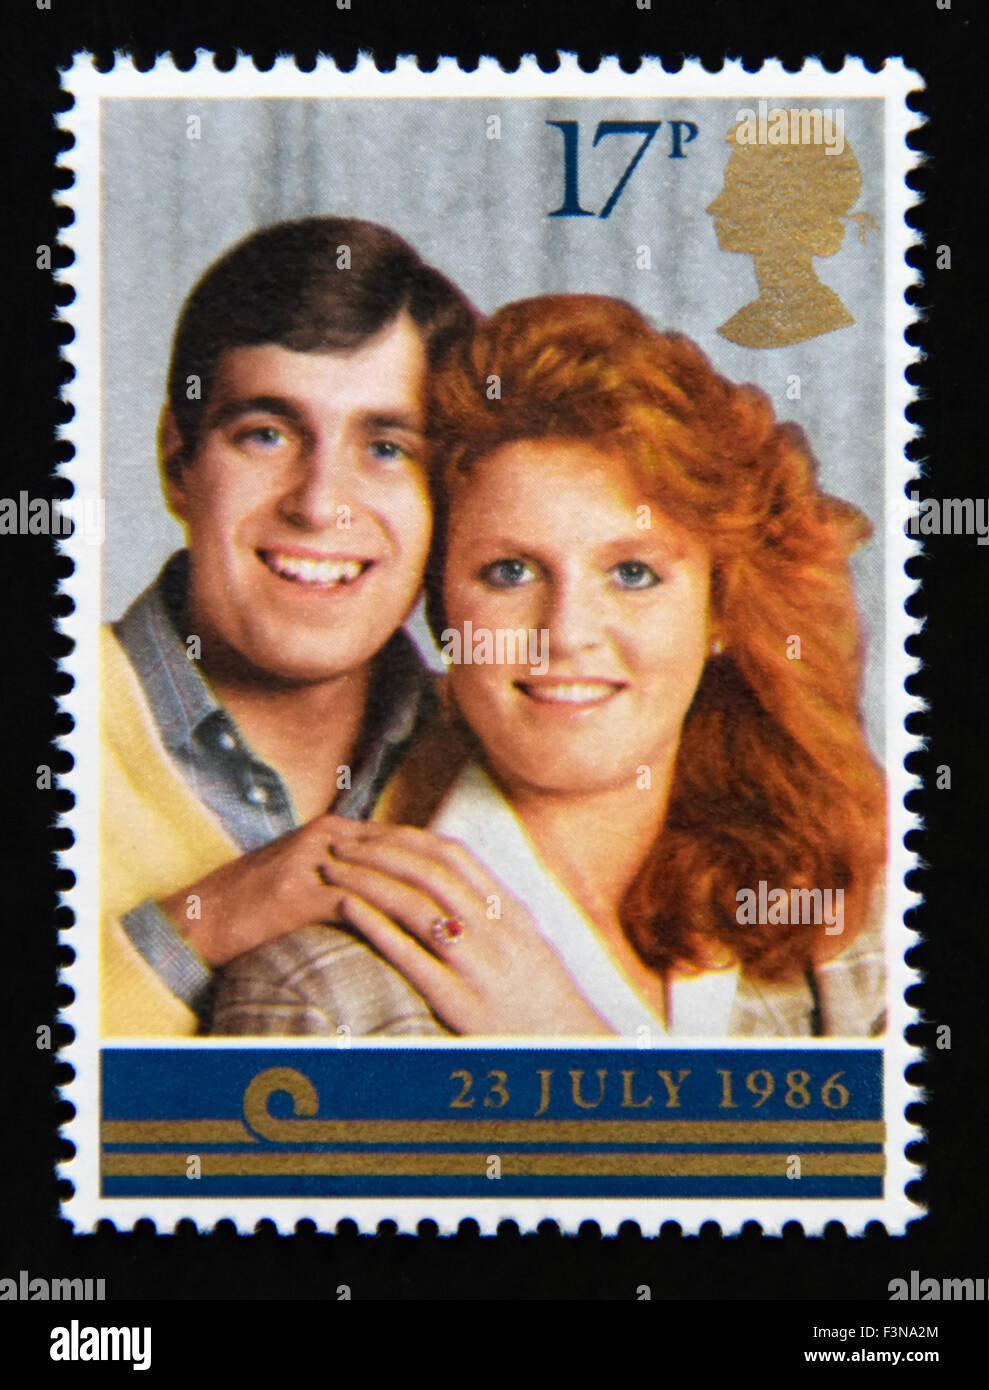 Postage stamp. Great Britain. Queen Elizabeth II. Royal Wedding 23rd.July 1986. 17p. Stock Photo